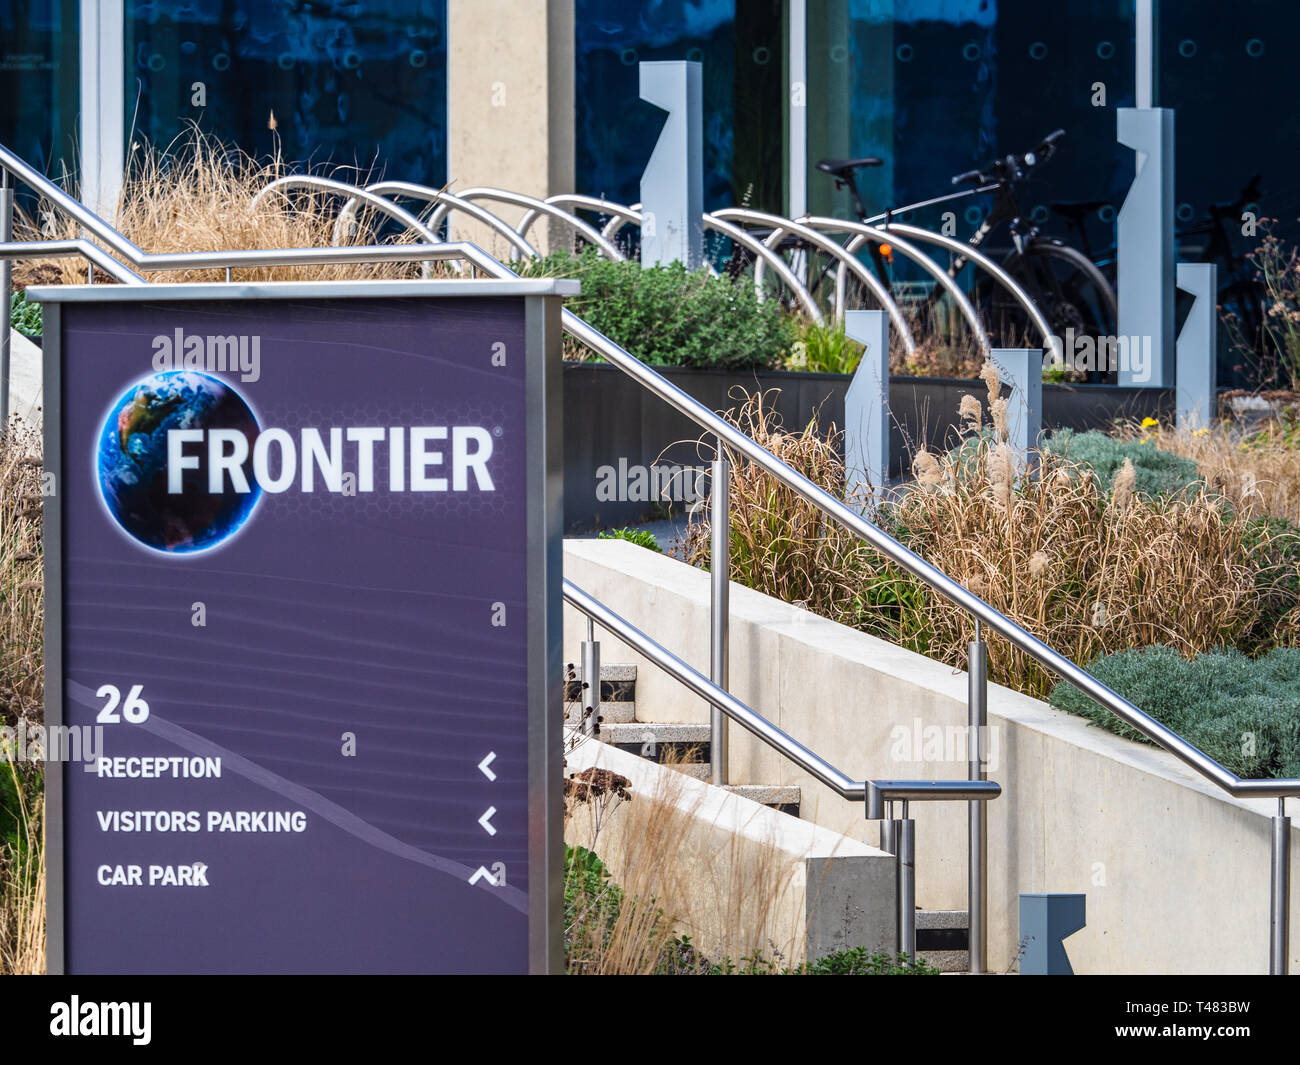 Frontier Developments PLC - Frontier Games HQ im Cambridge Science Park - Frontier ist Videospielentwickler mit Sitz in Cambridge. Stockfoto